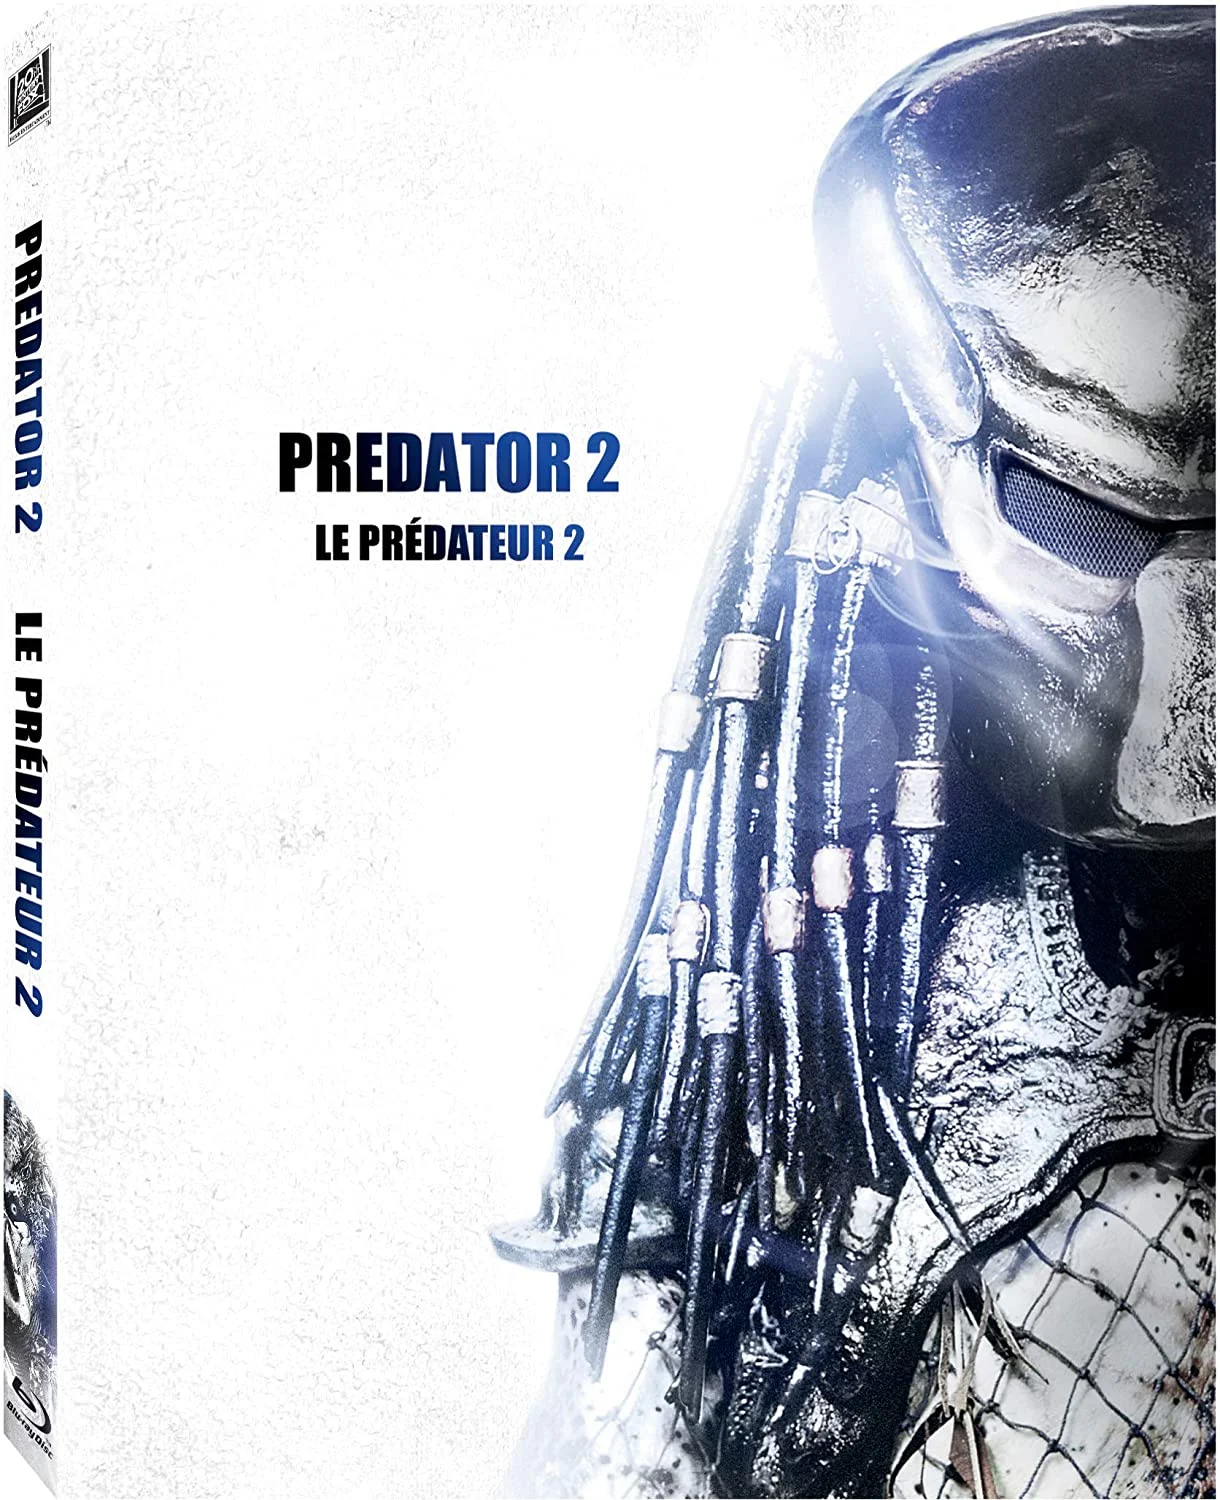 Predator 2 (Blu-ray) on MovieShack